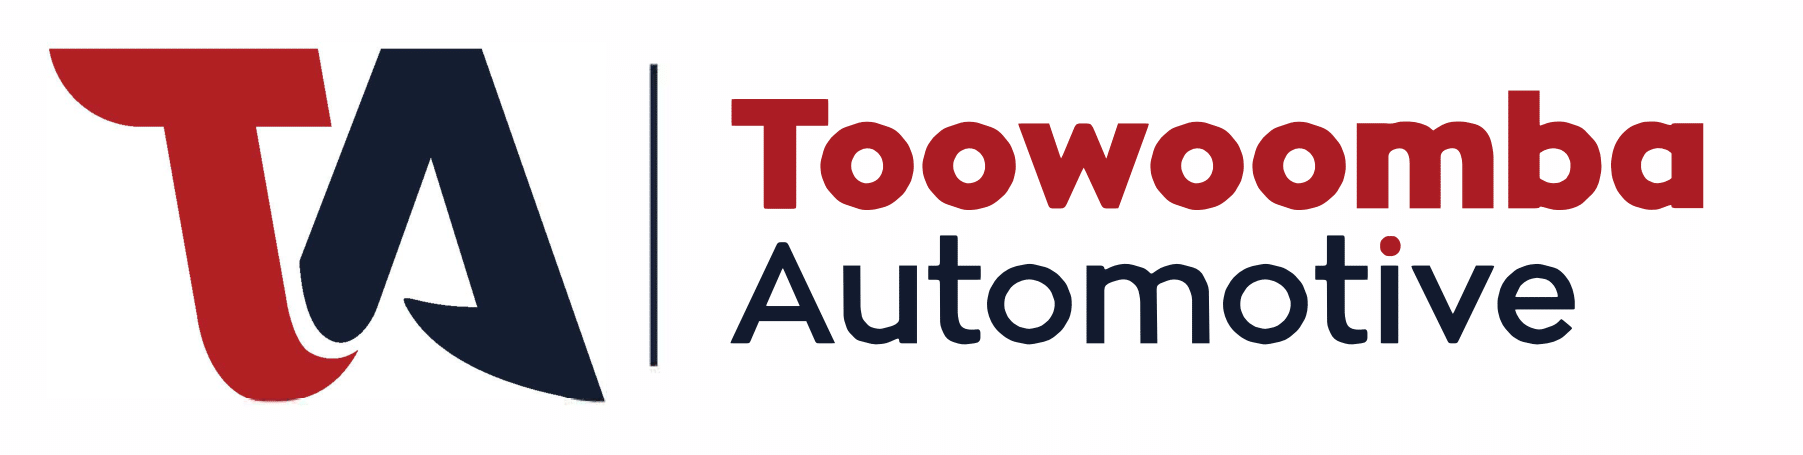 Toowoomba Automotive logos 2